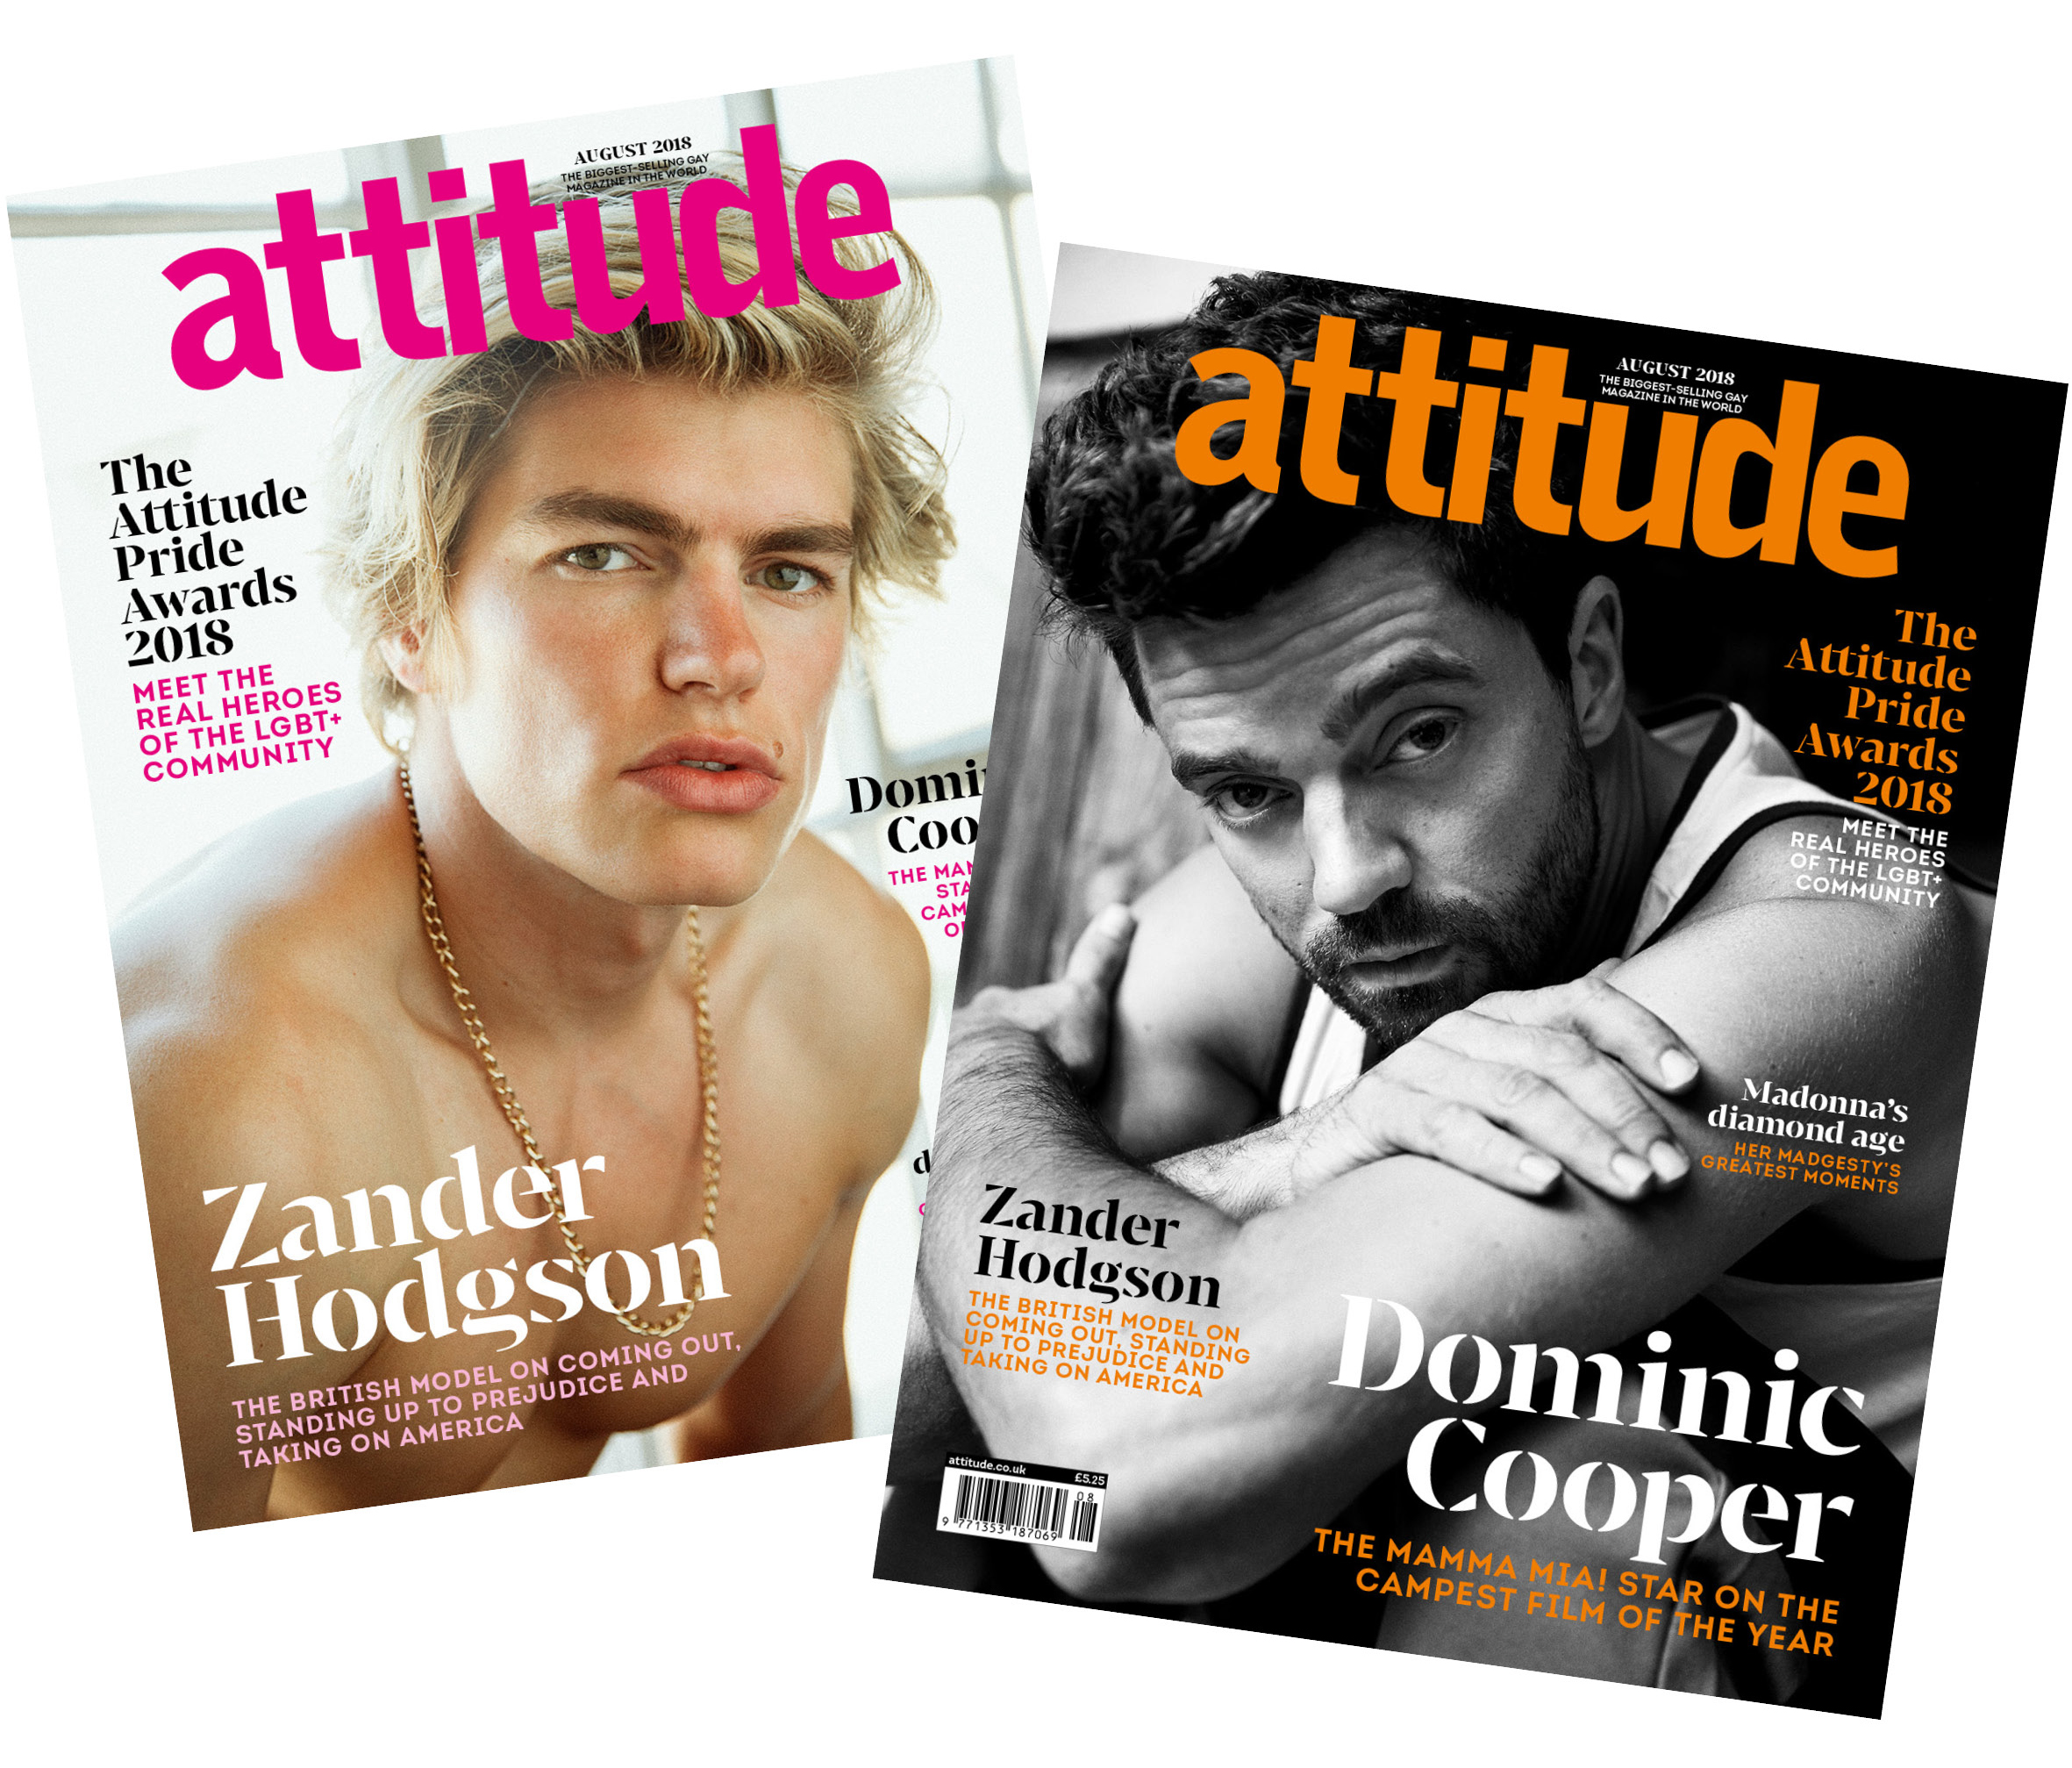 Attitude magazine